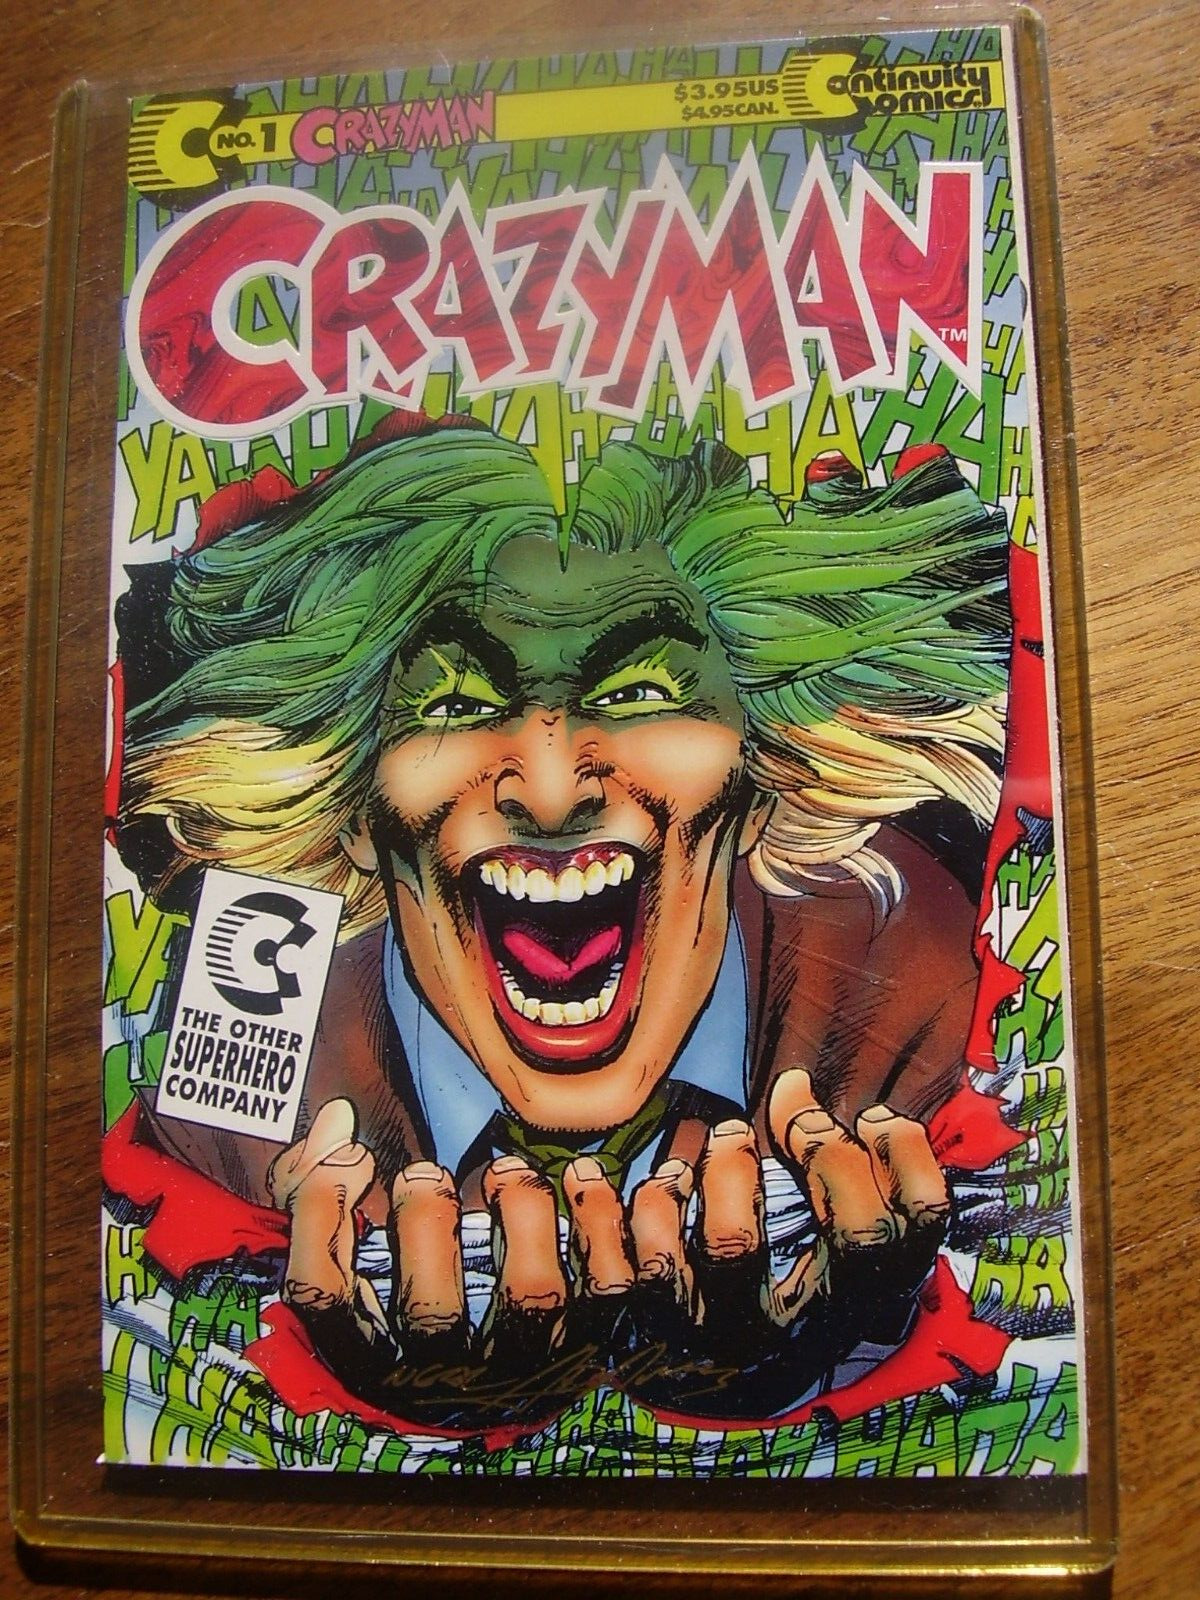 Crazyman Comic No 1 Signed By NEAL ADAMS, Batman Artist - 1991